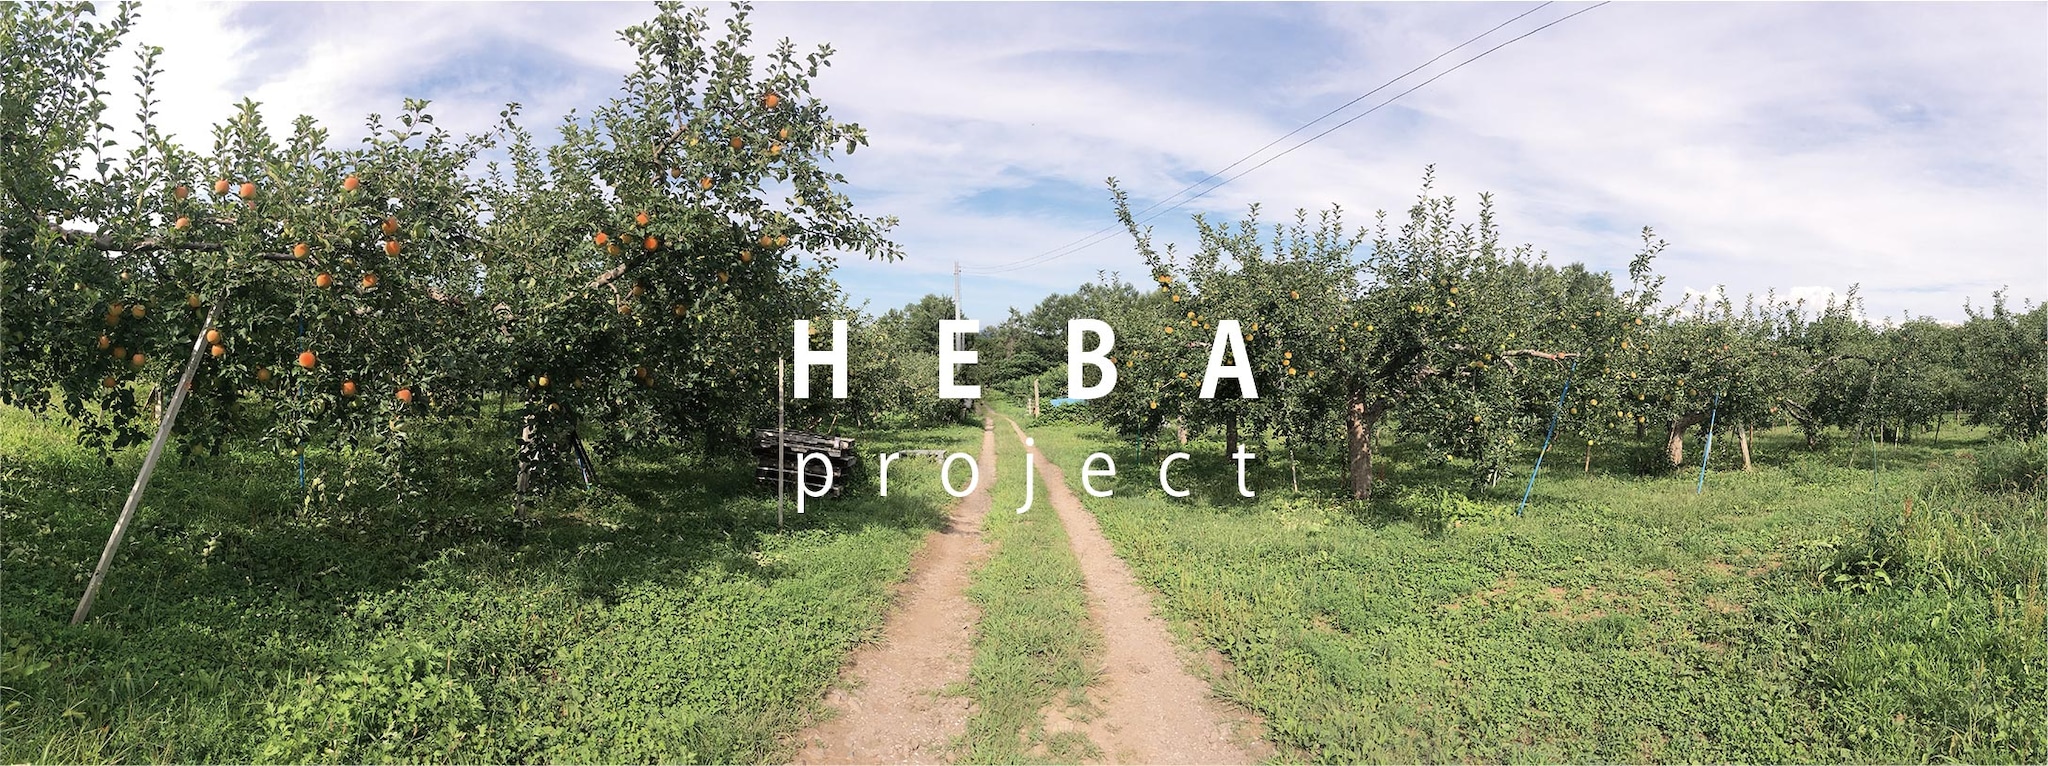 HEBA project